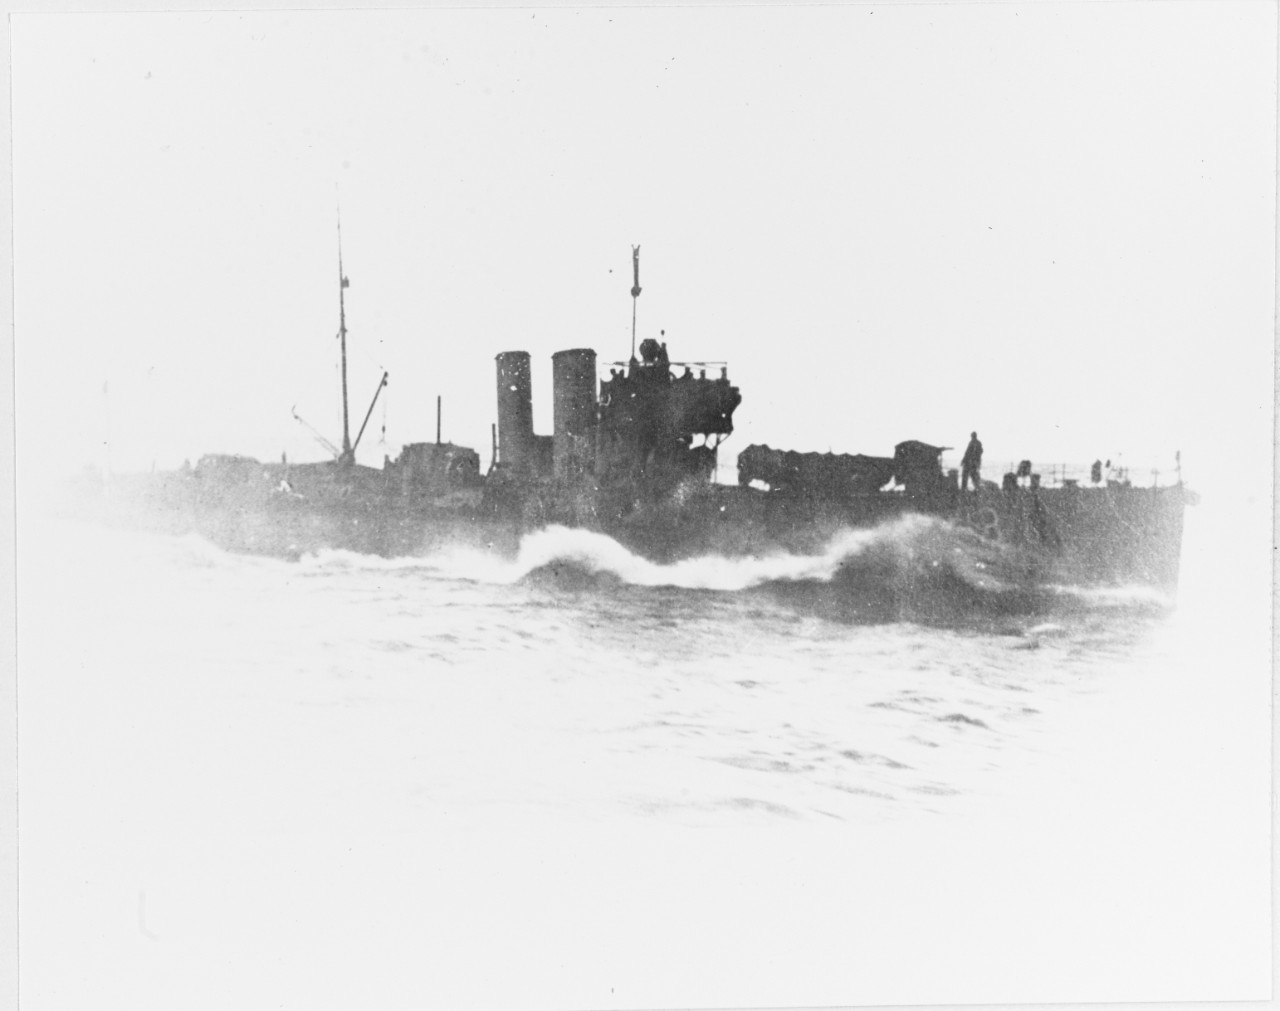 98M (Austrian Torpedo Boat, 1914-1941)